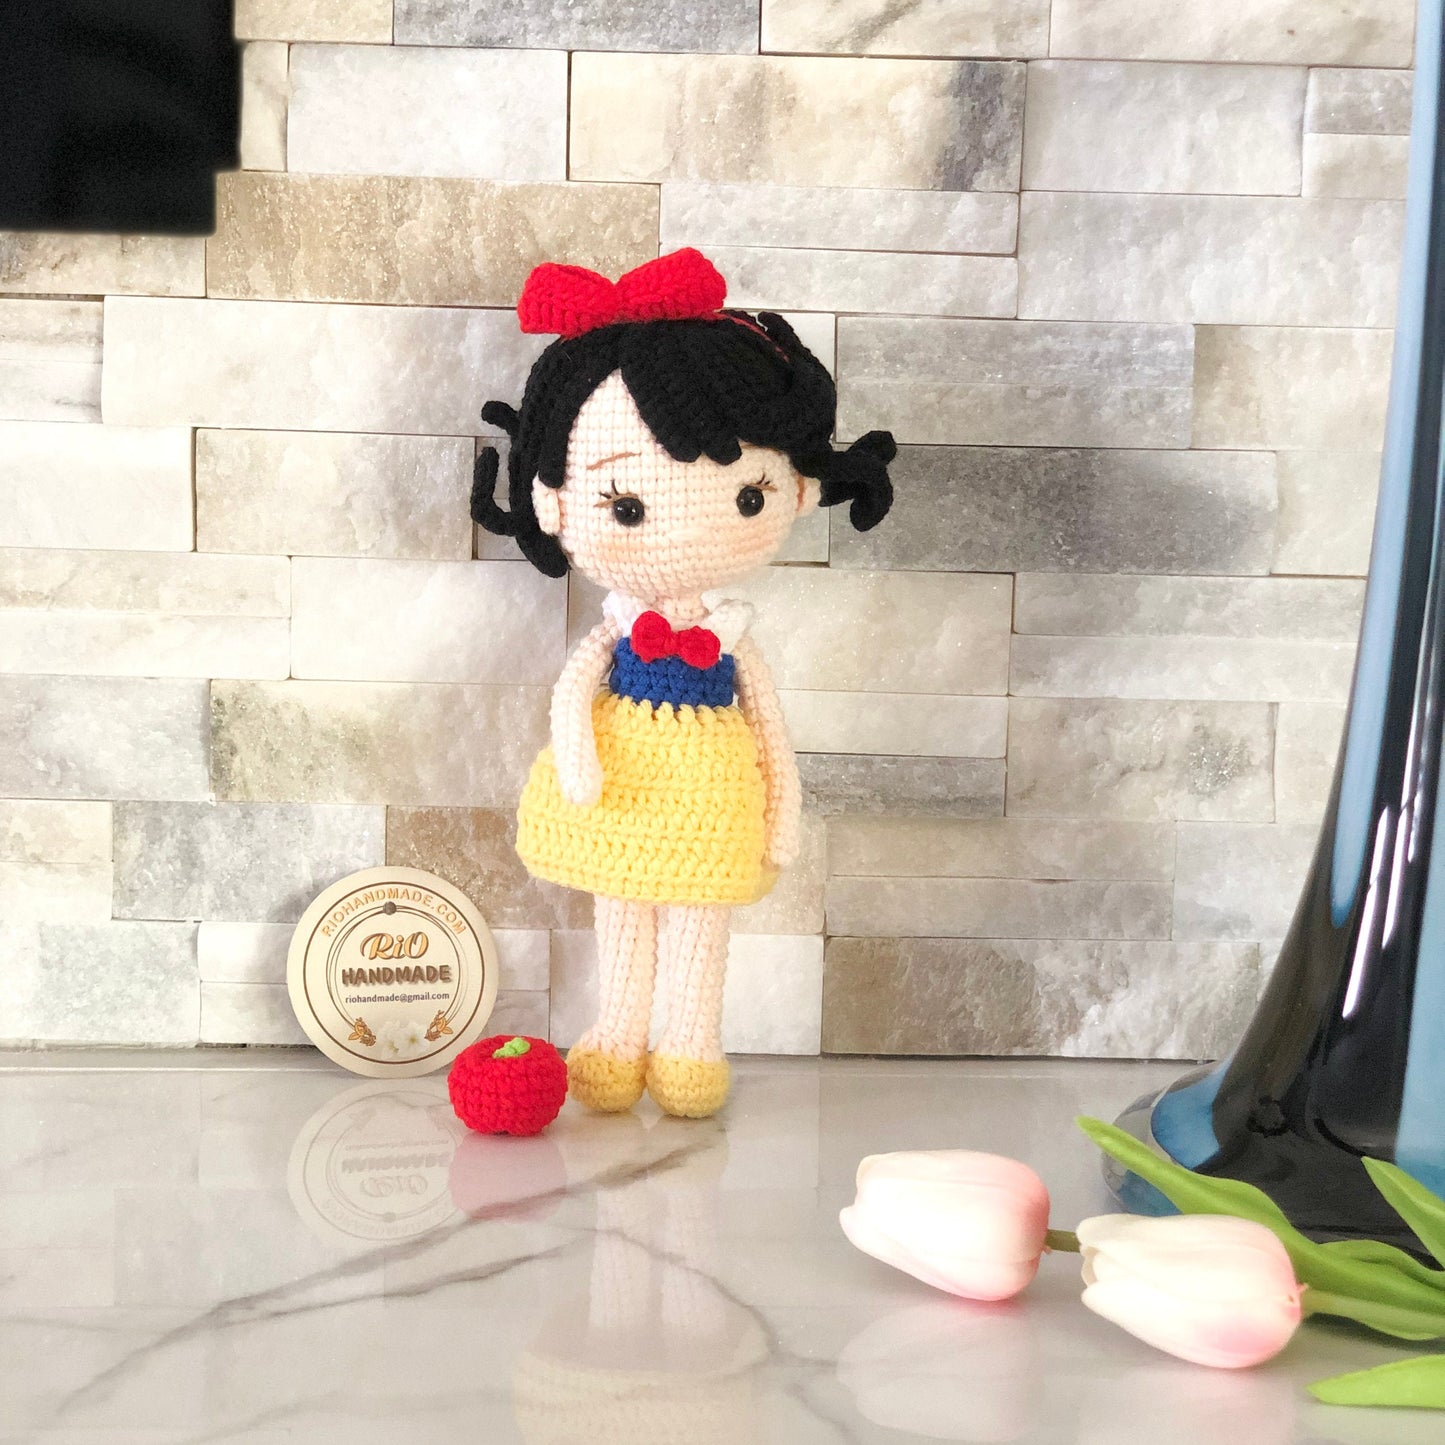 Handmade  small animator princess doll crochet, amigurumi doll, cute, toy for kid, adult hobby